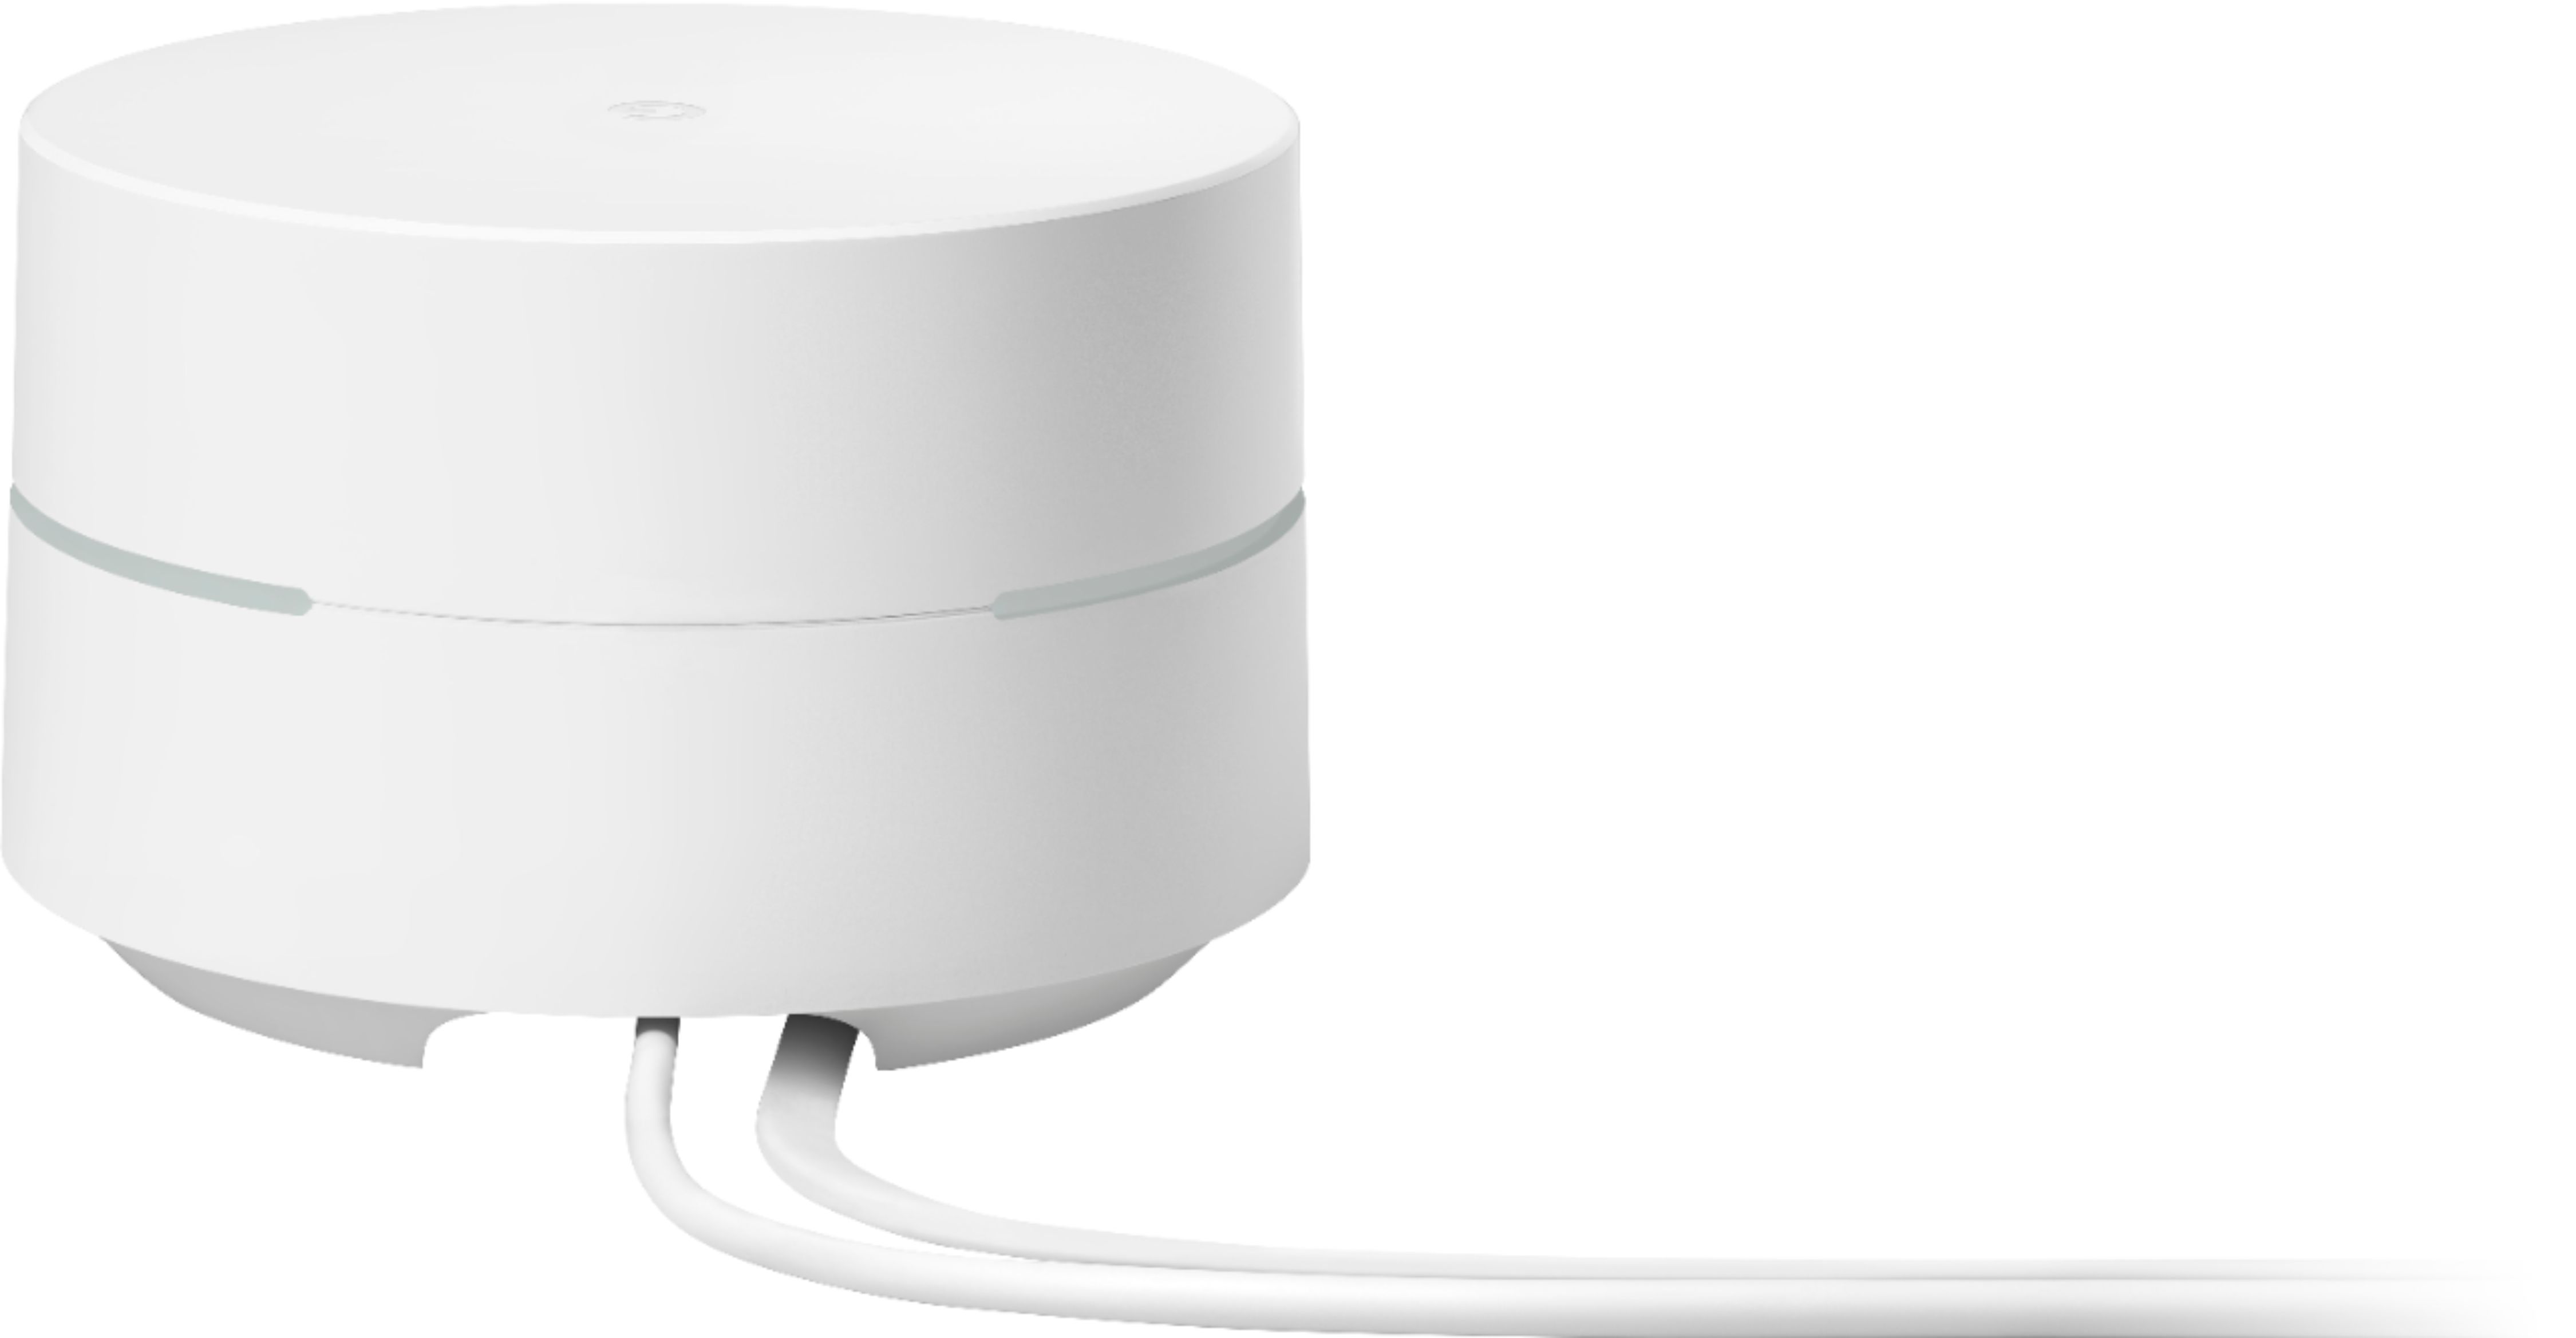 Google Wifi Mesh Router (AC1200) 1 White - Best Buy